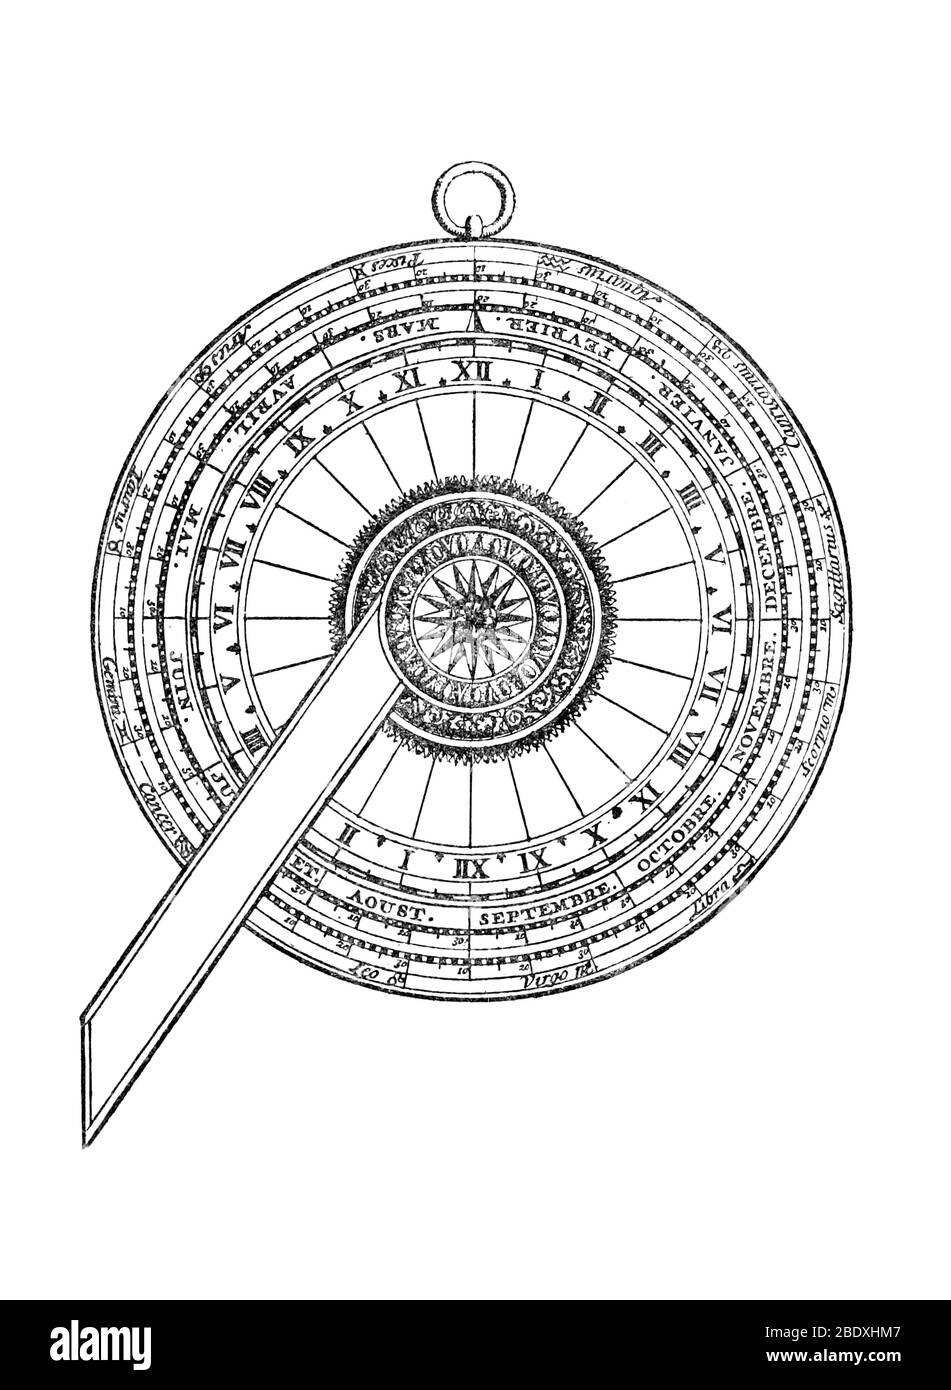 Navigation Instrument, Nocturnal, 17th Century Stock Photo